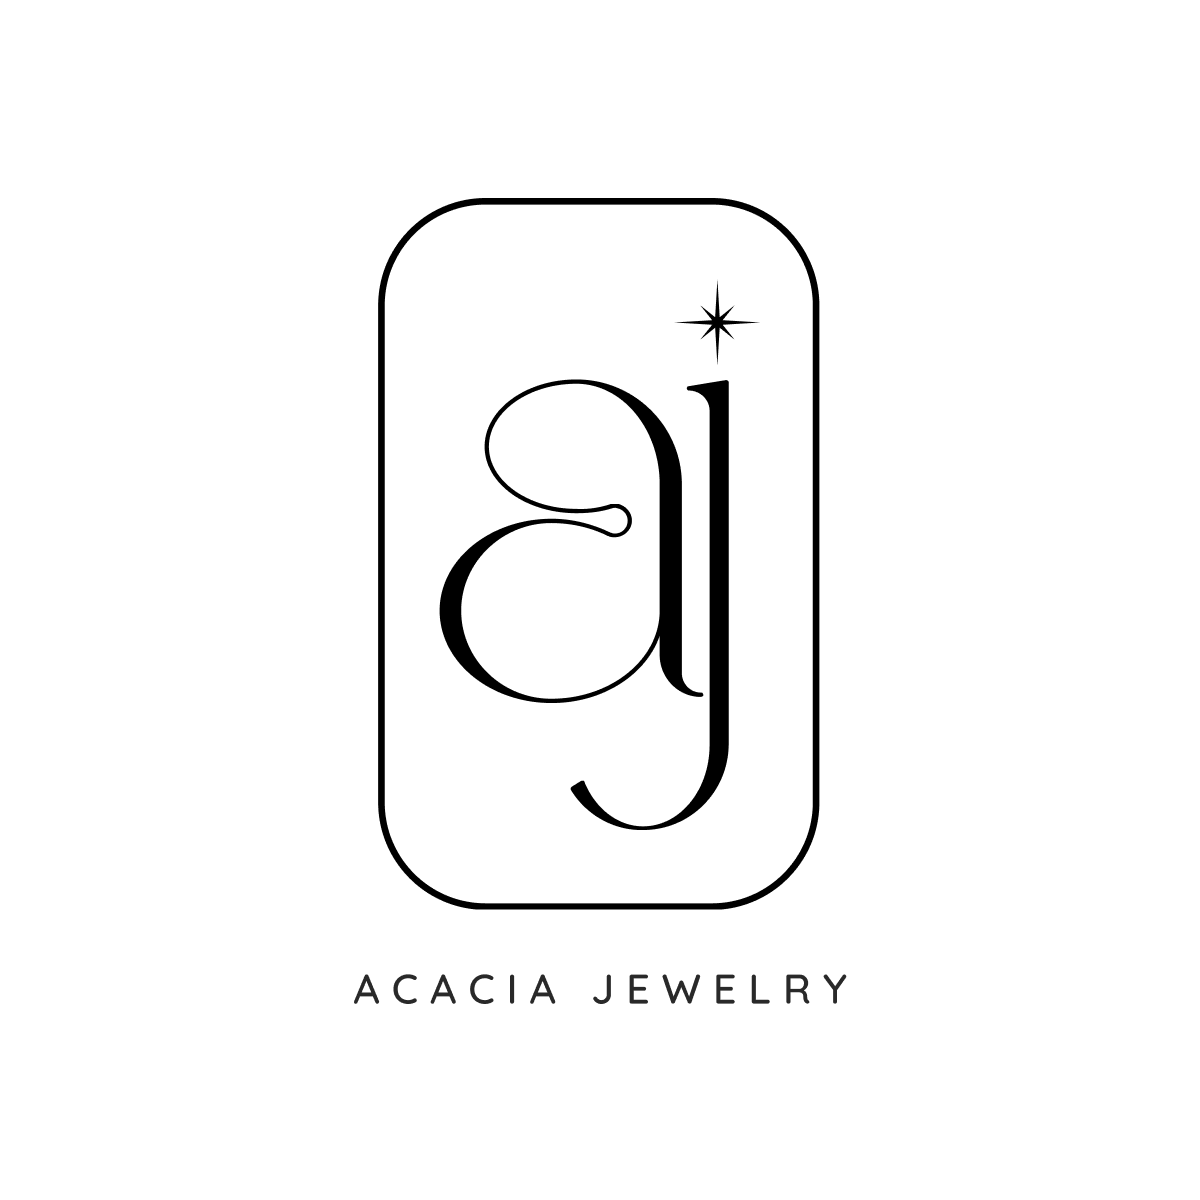 Acacia Jewelry